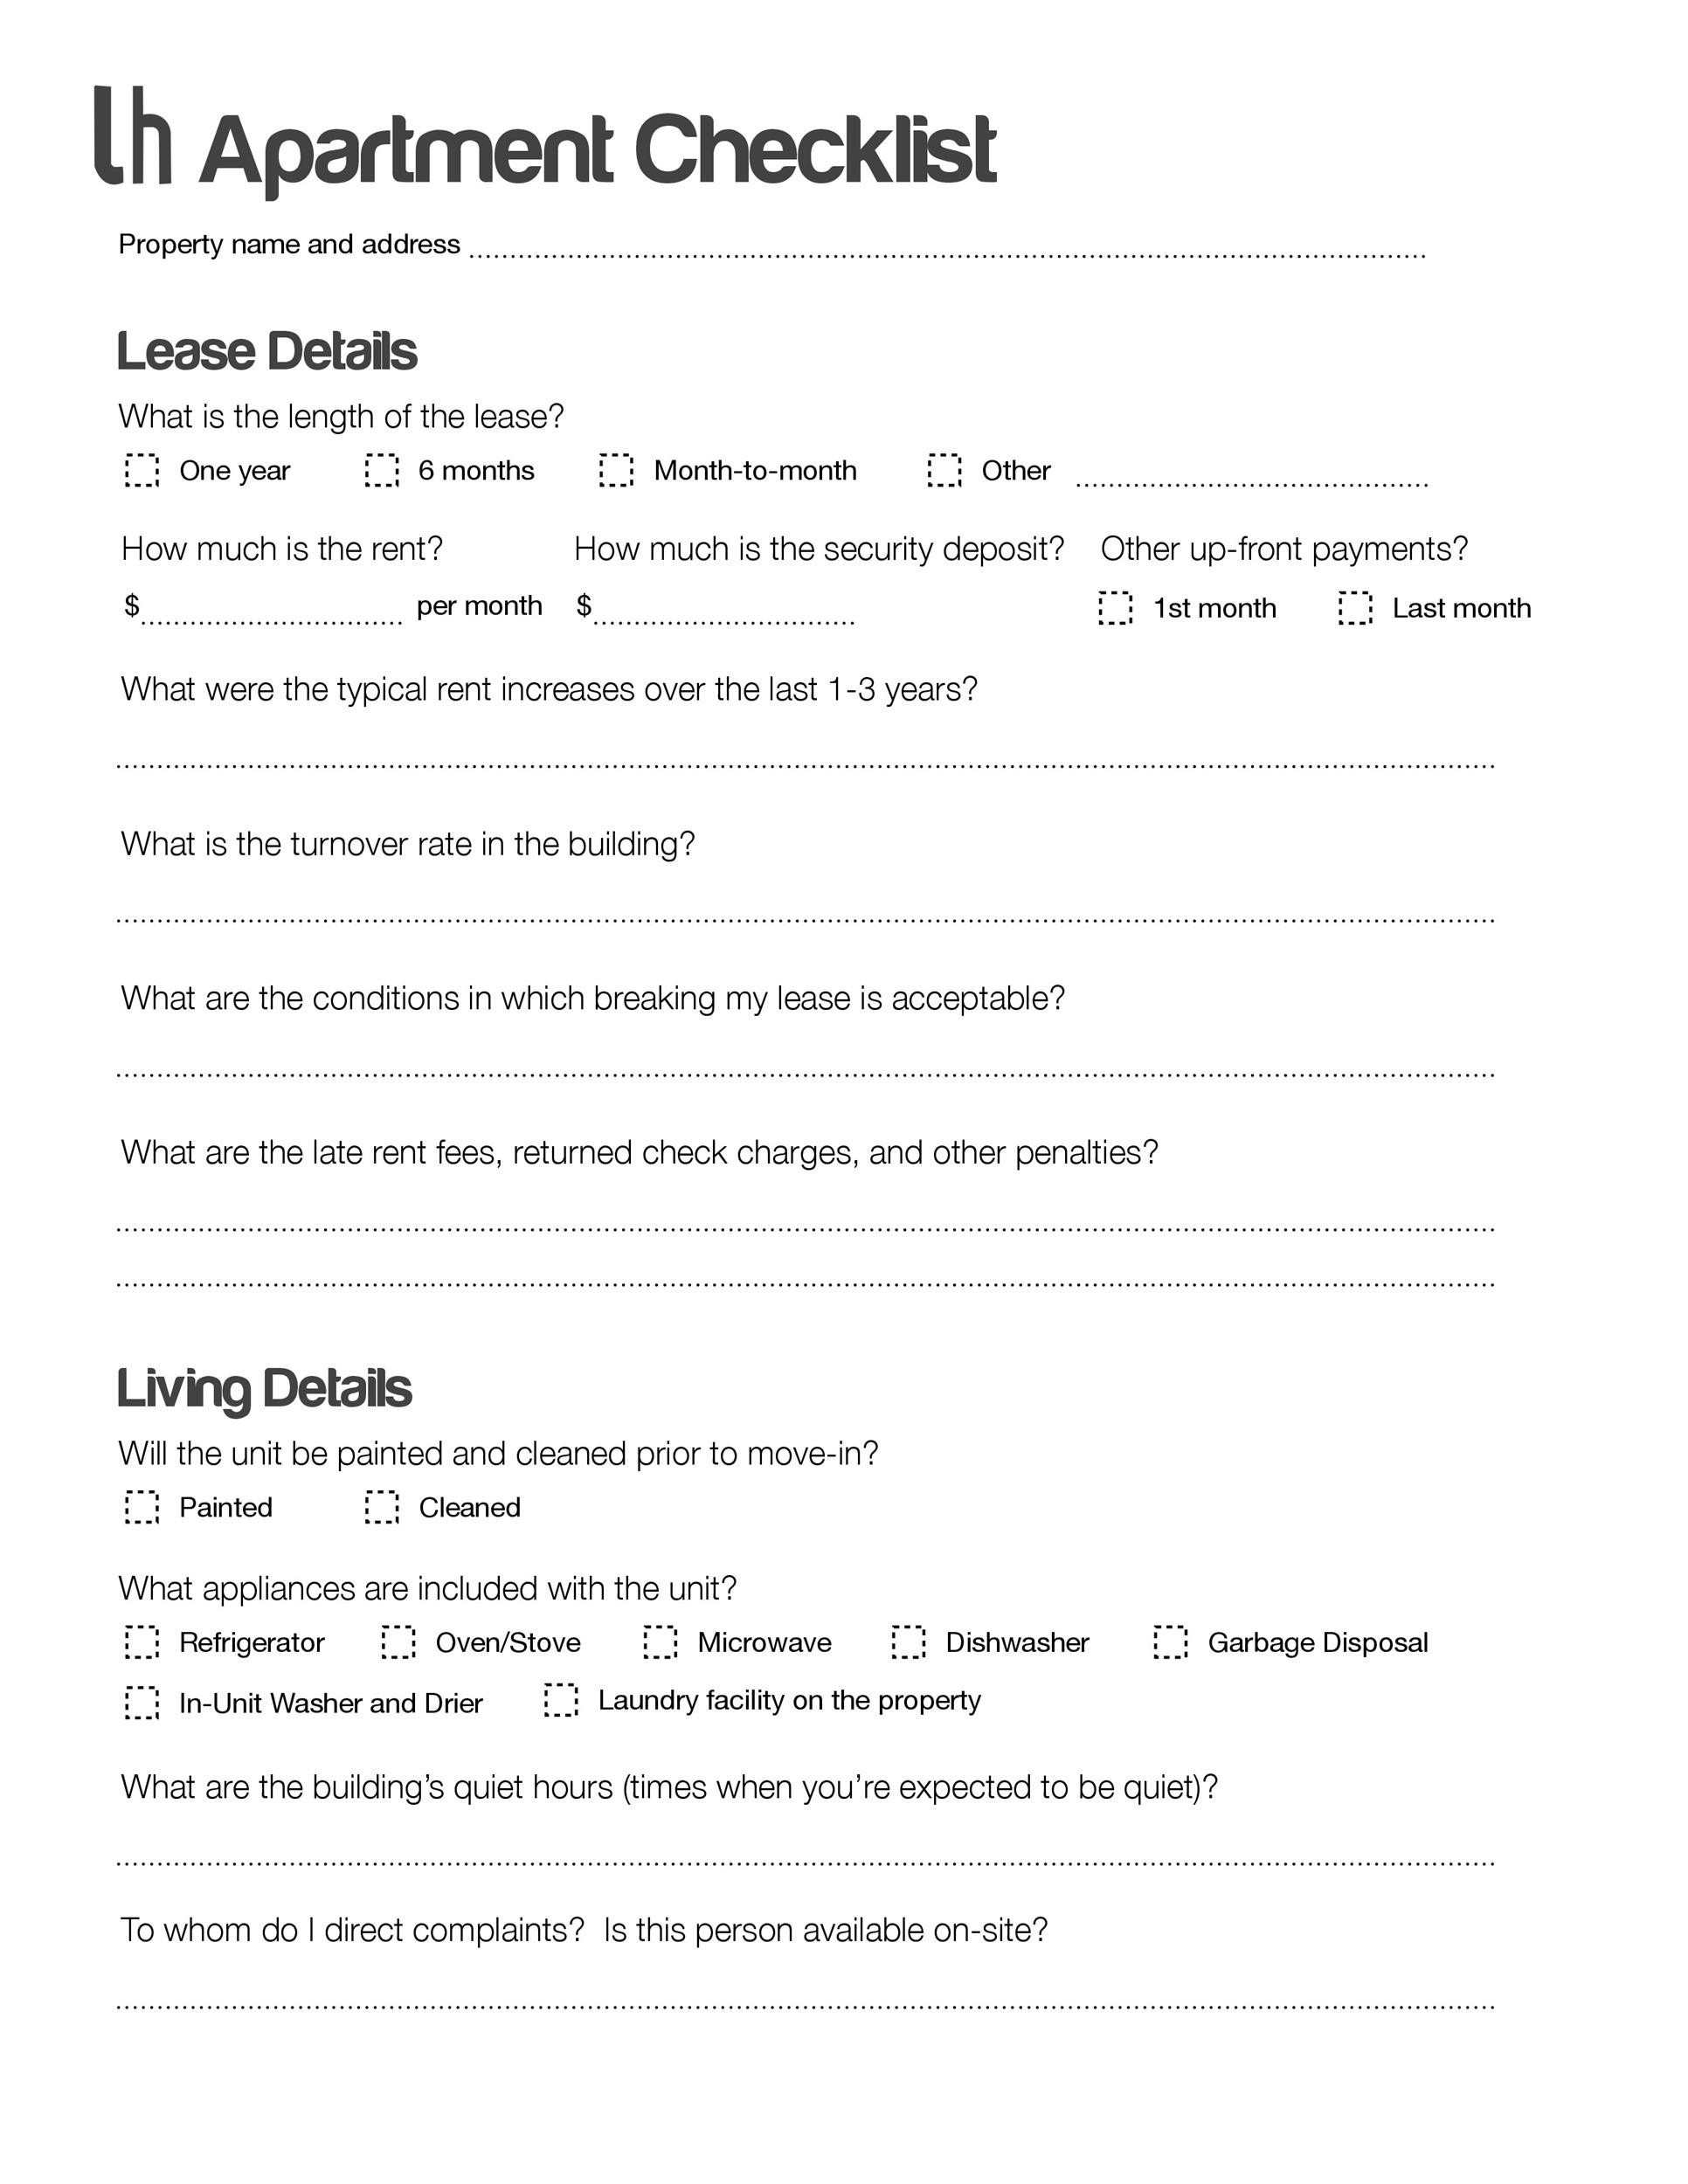 Free apartment checklist 24